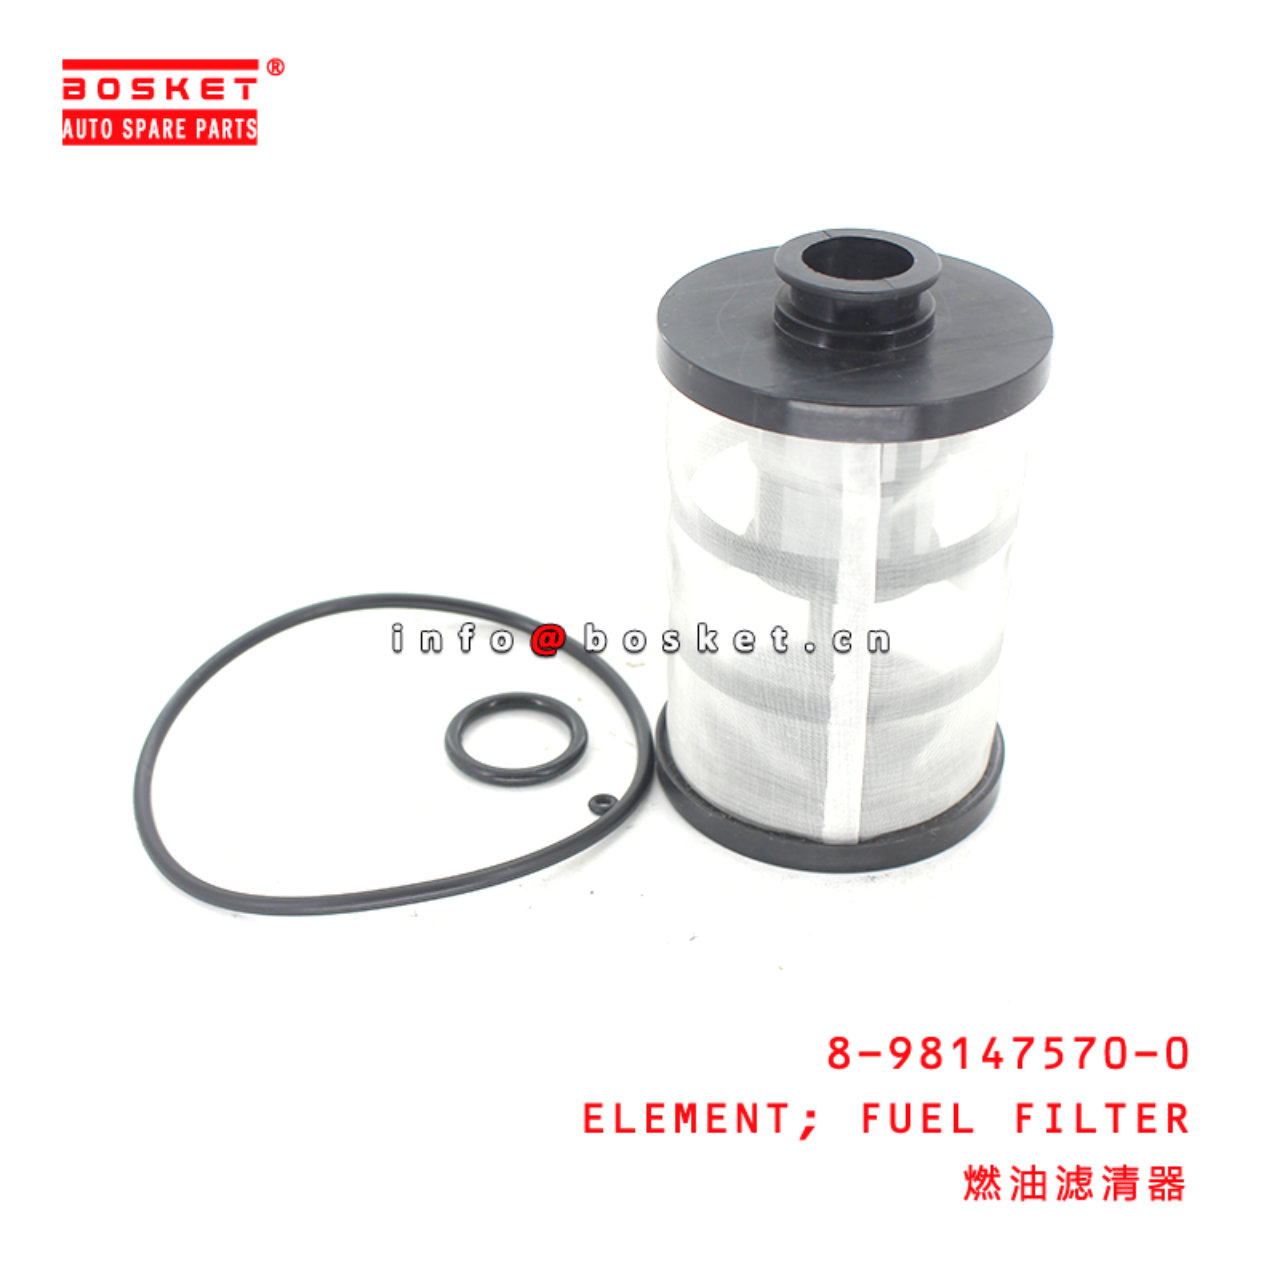 8-98147570-0 Fuel Filter Element Suitable for ISUZU FTR FSR 8981475700